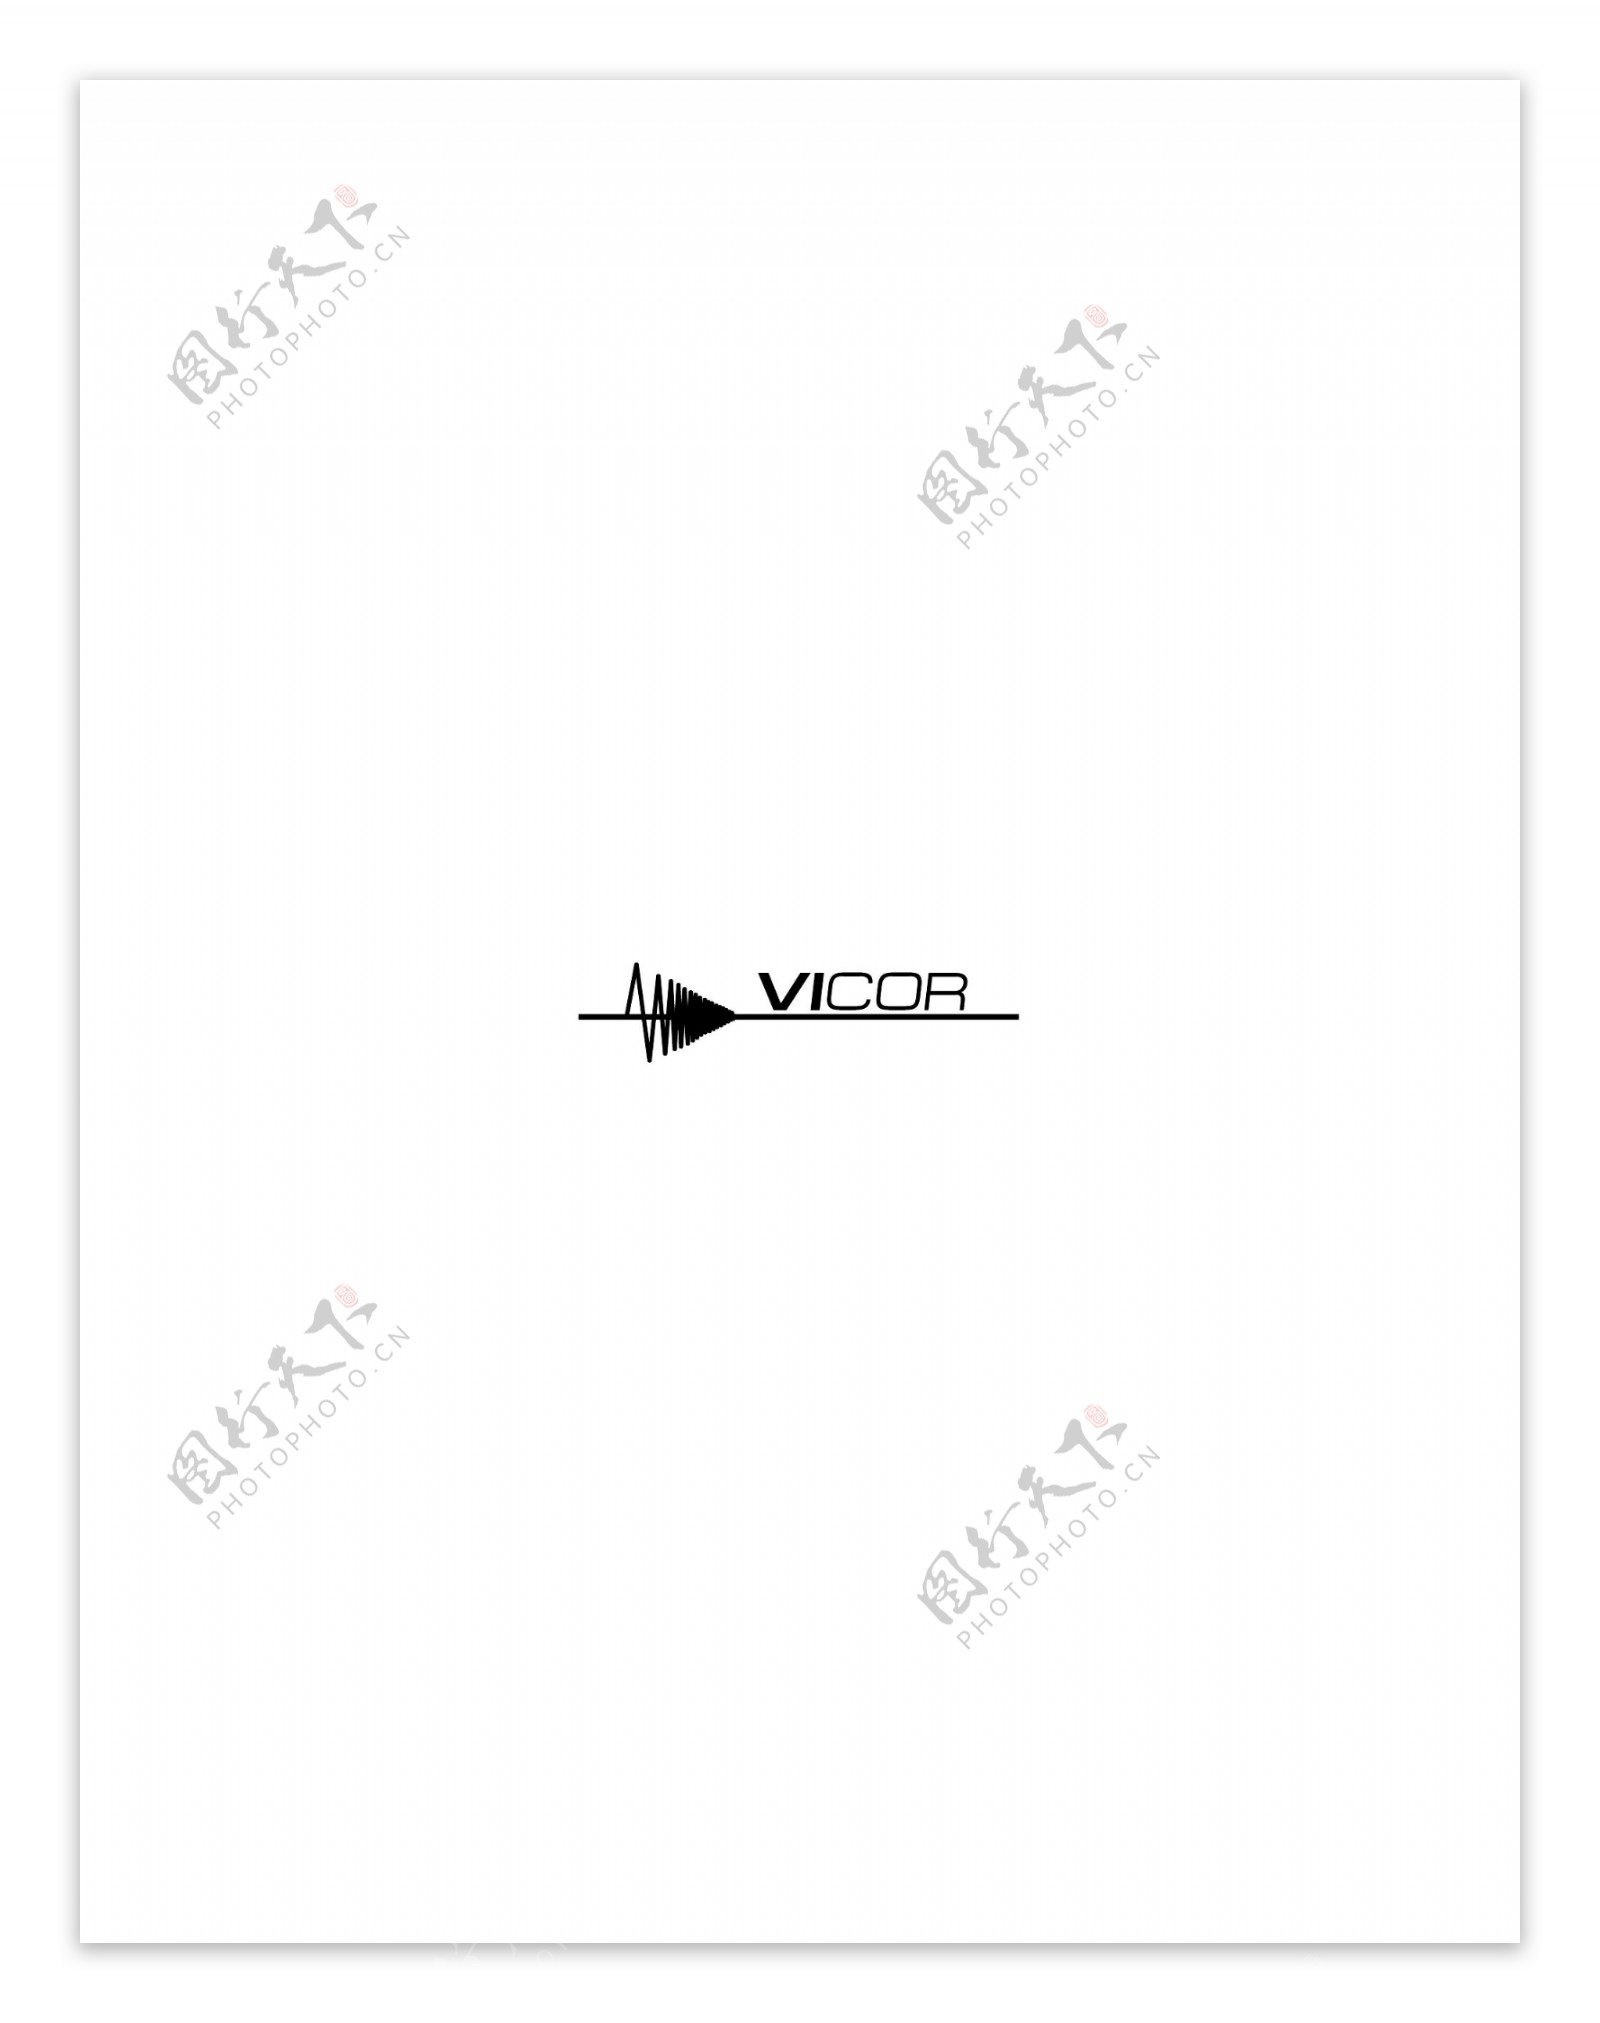 Vicorlogo设计欣赏国外知名公司标志范例Vicor下载标志设计欣赏